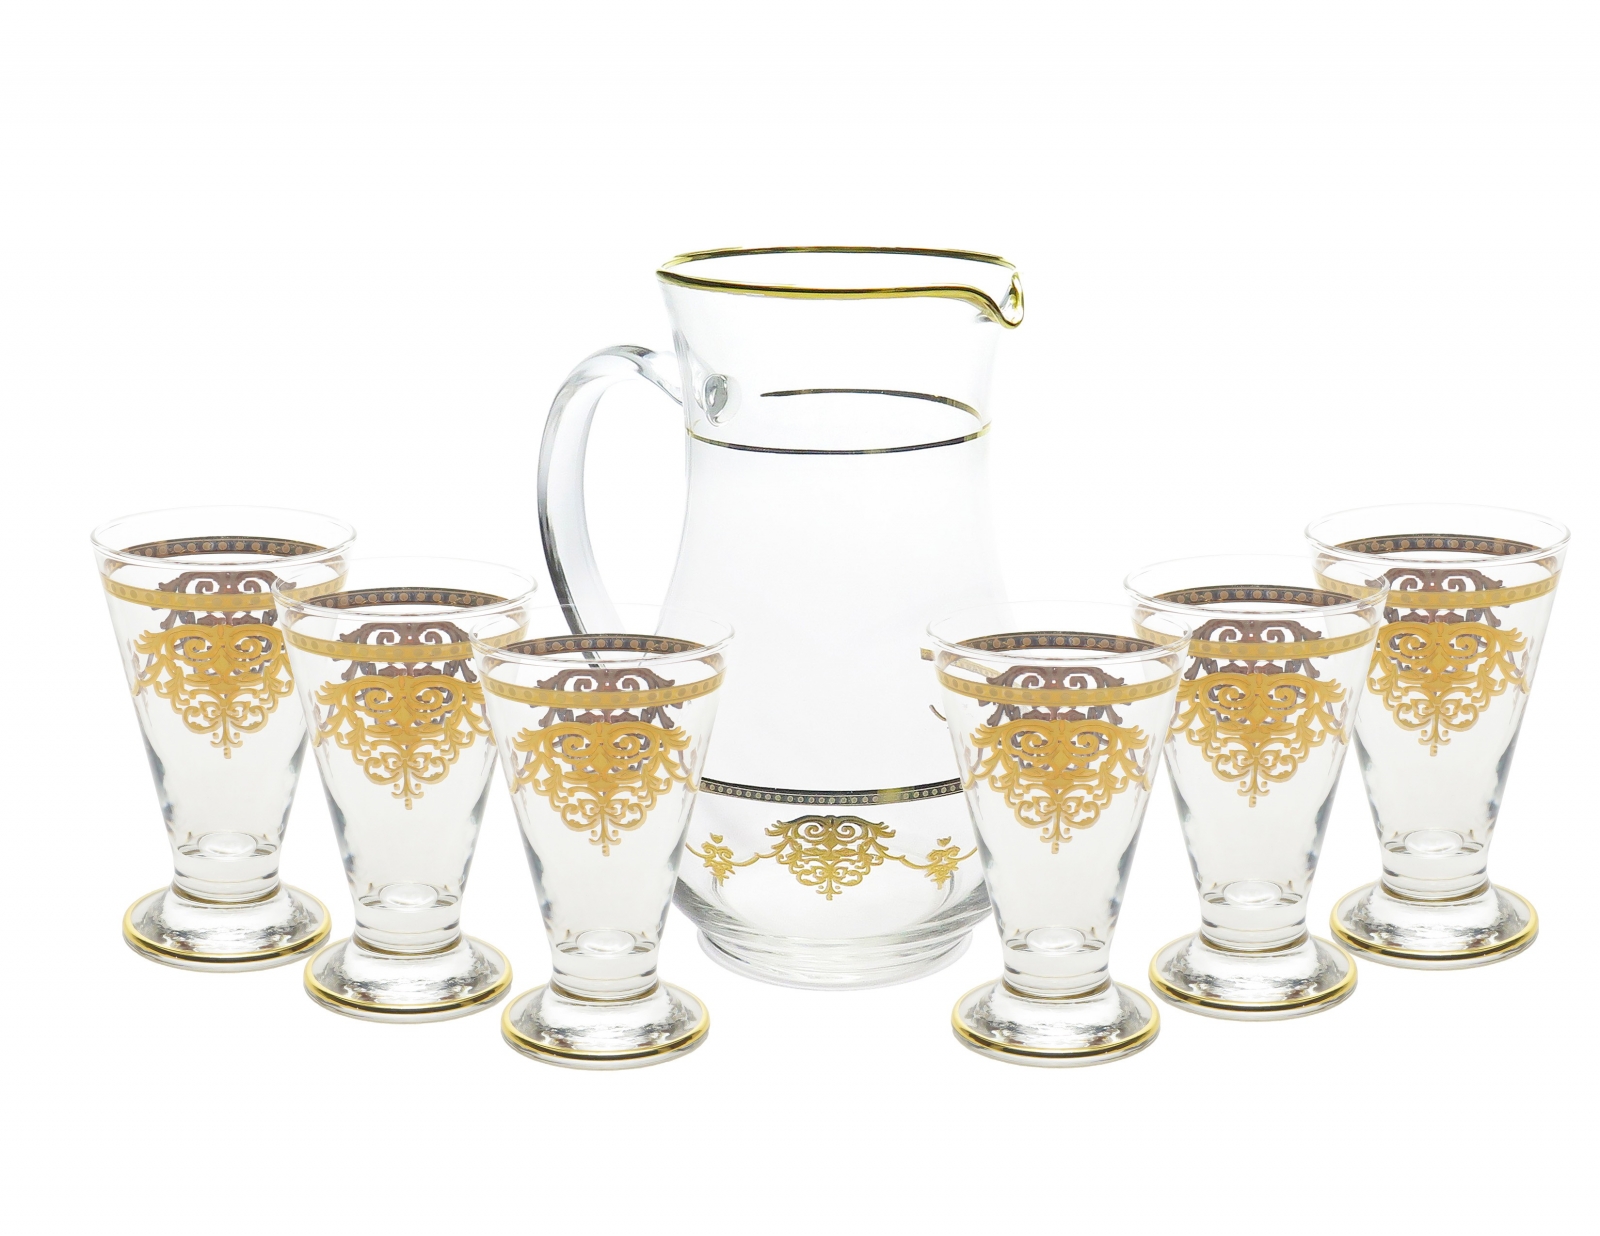 7 Piece Drinkware Set with Gold Artwork